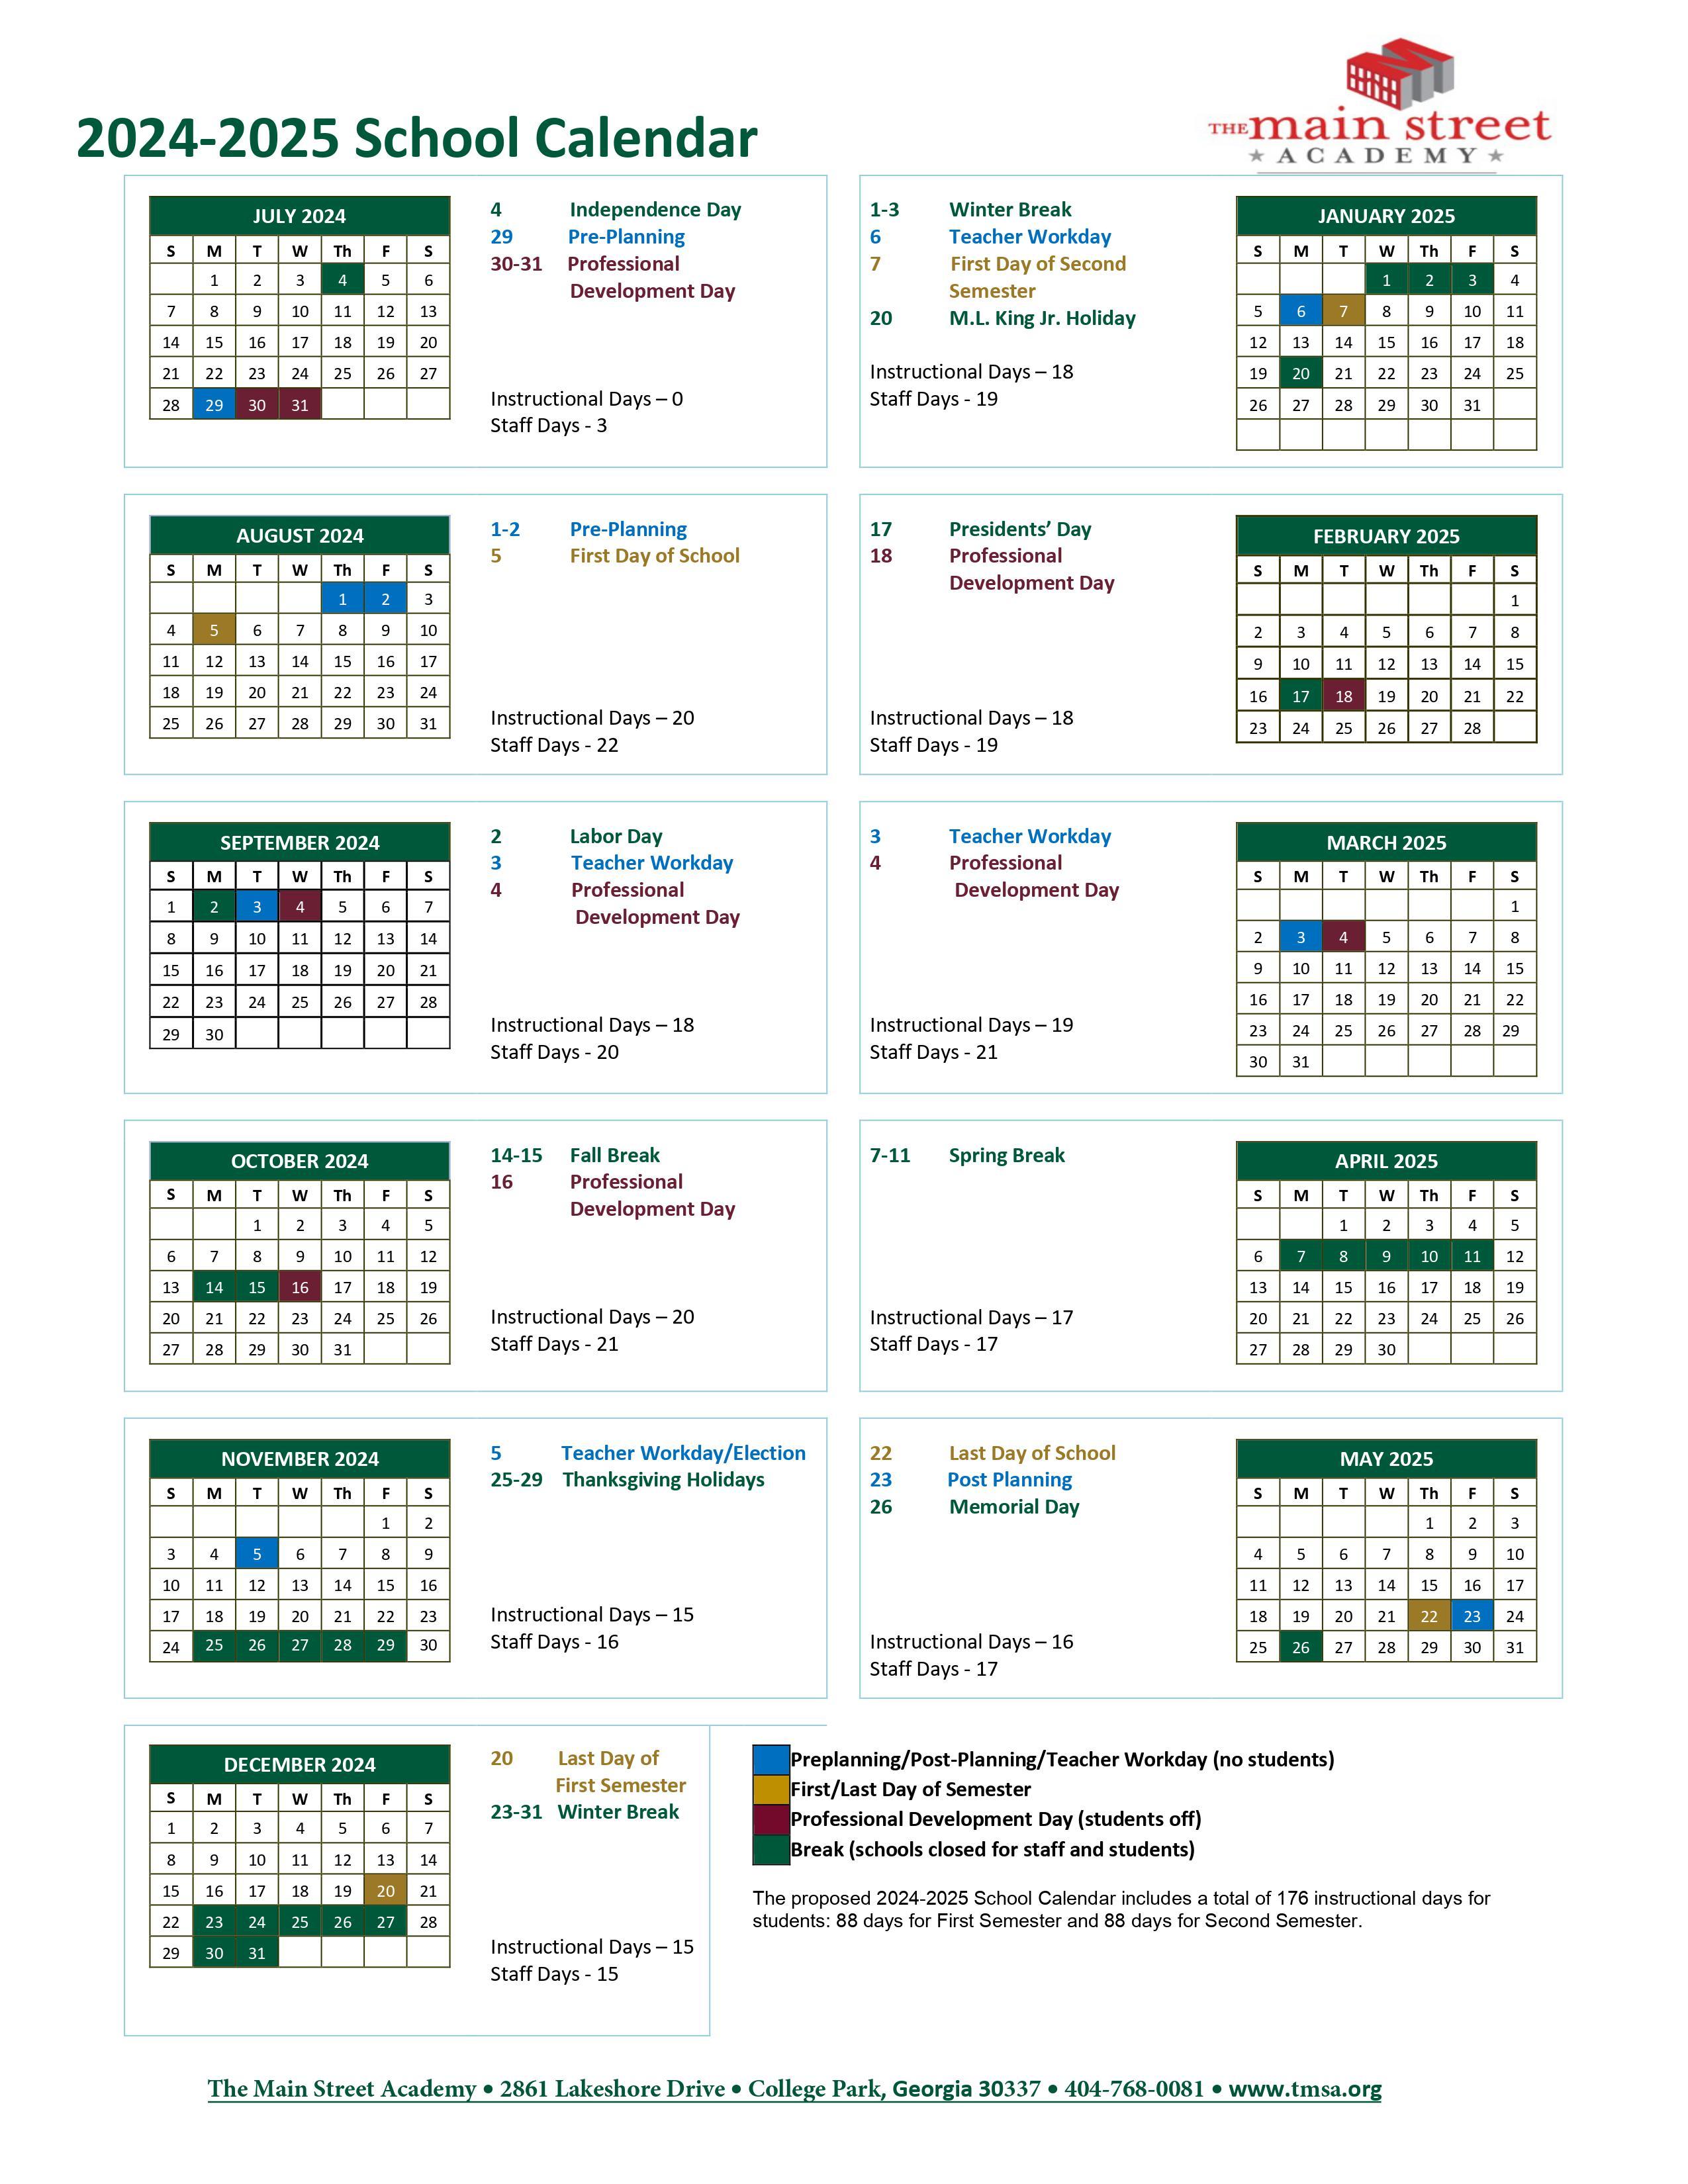 TMSA 2024 - 2025 School Calendar